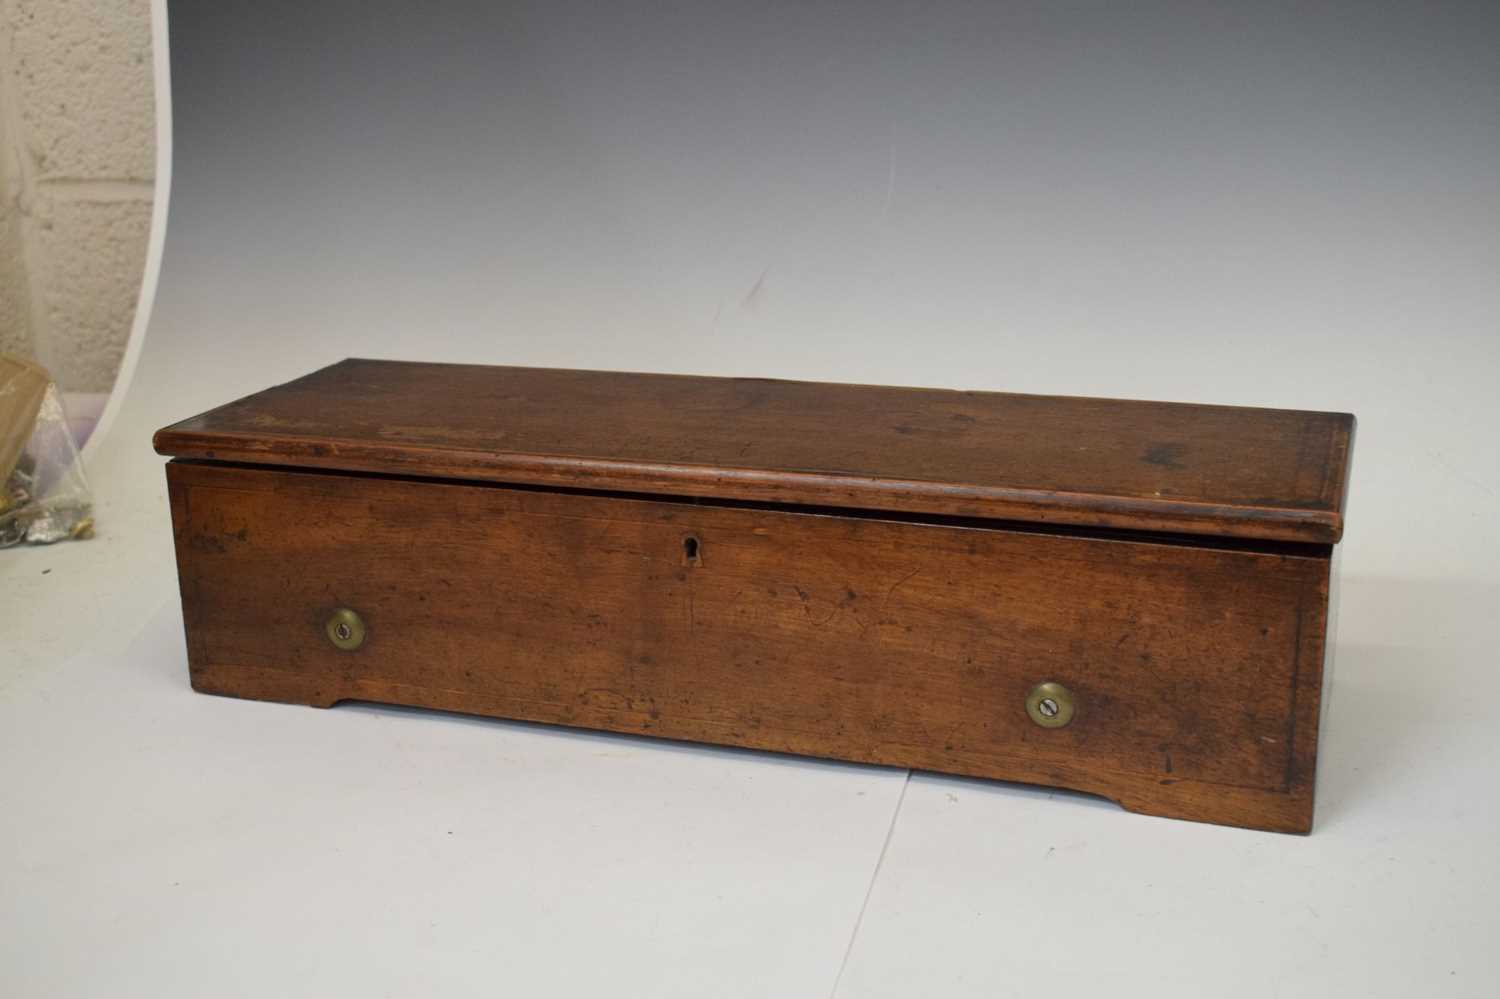 19th century mahogany inlaid cylindrical musical box - Image 11 of 12